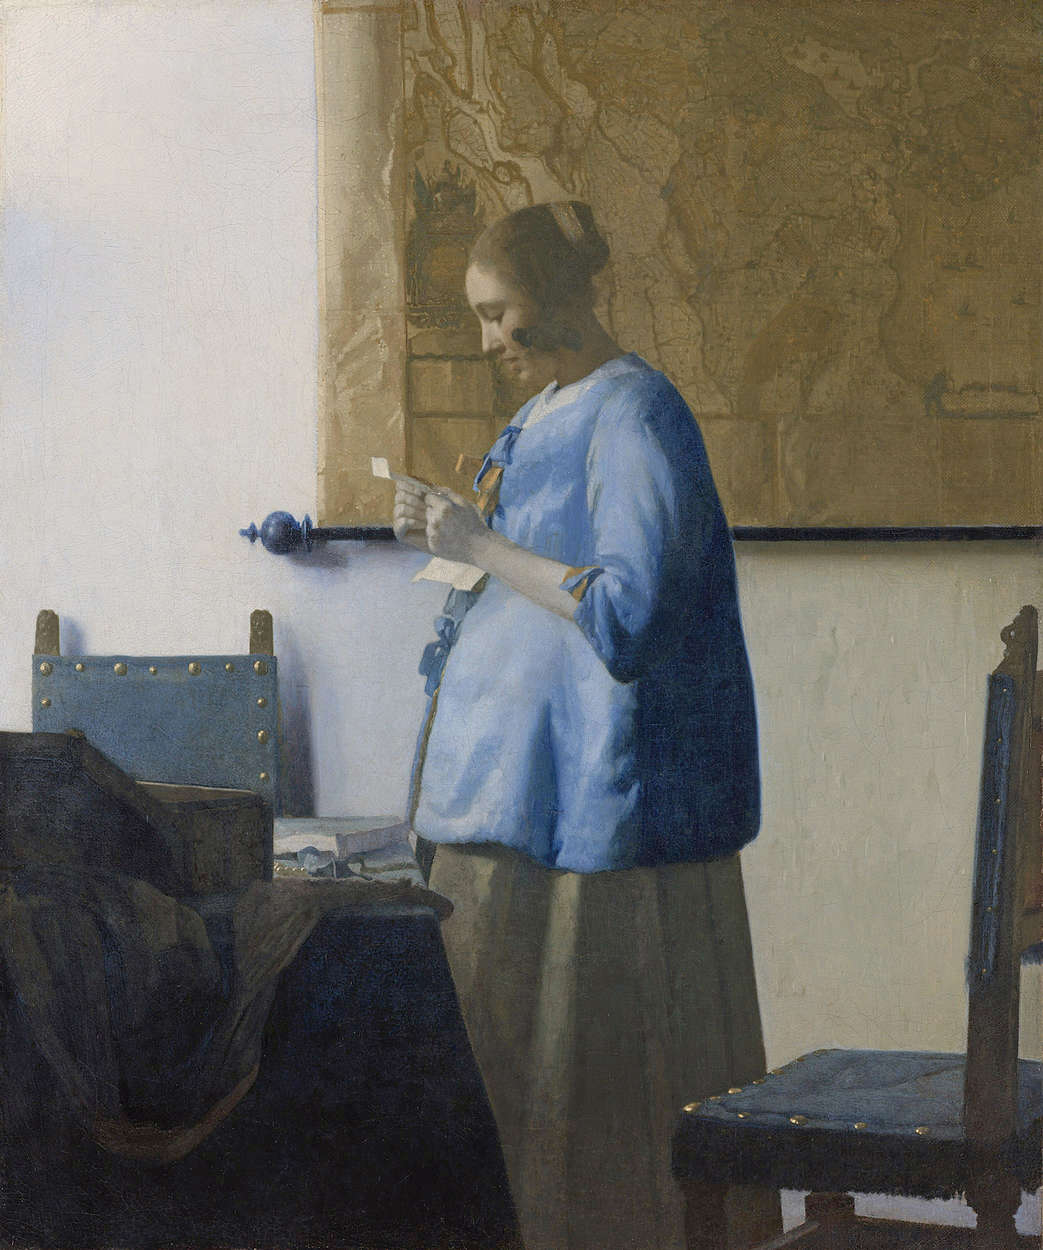             Mural "Mujer leyendo una carta" de Jan Vermeer
        